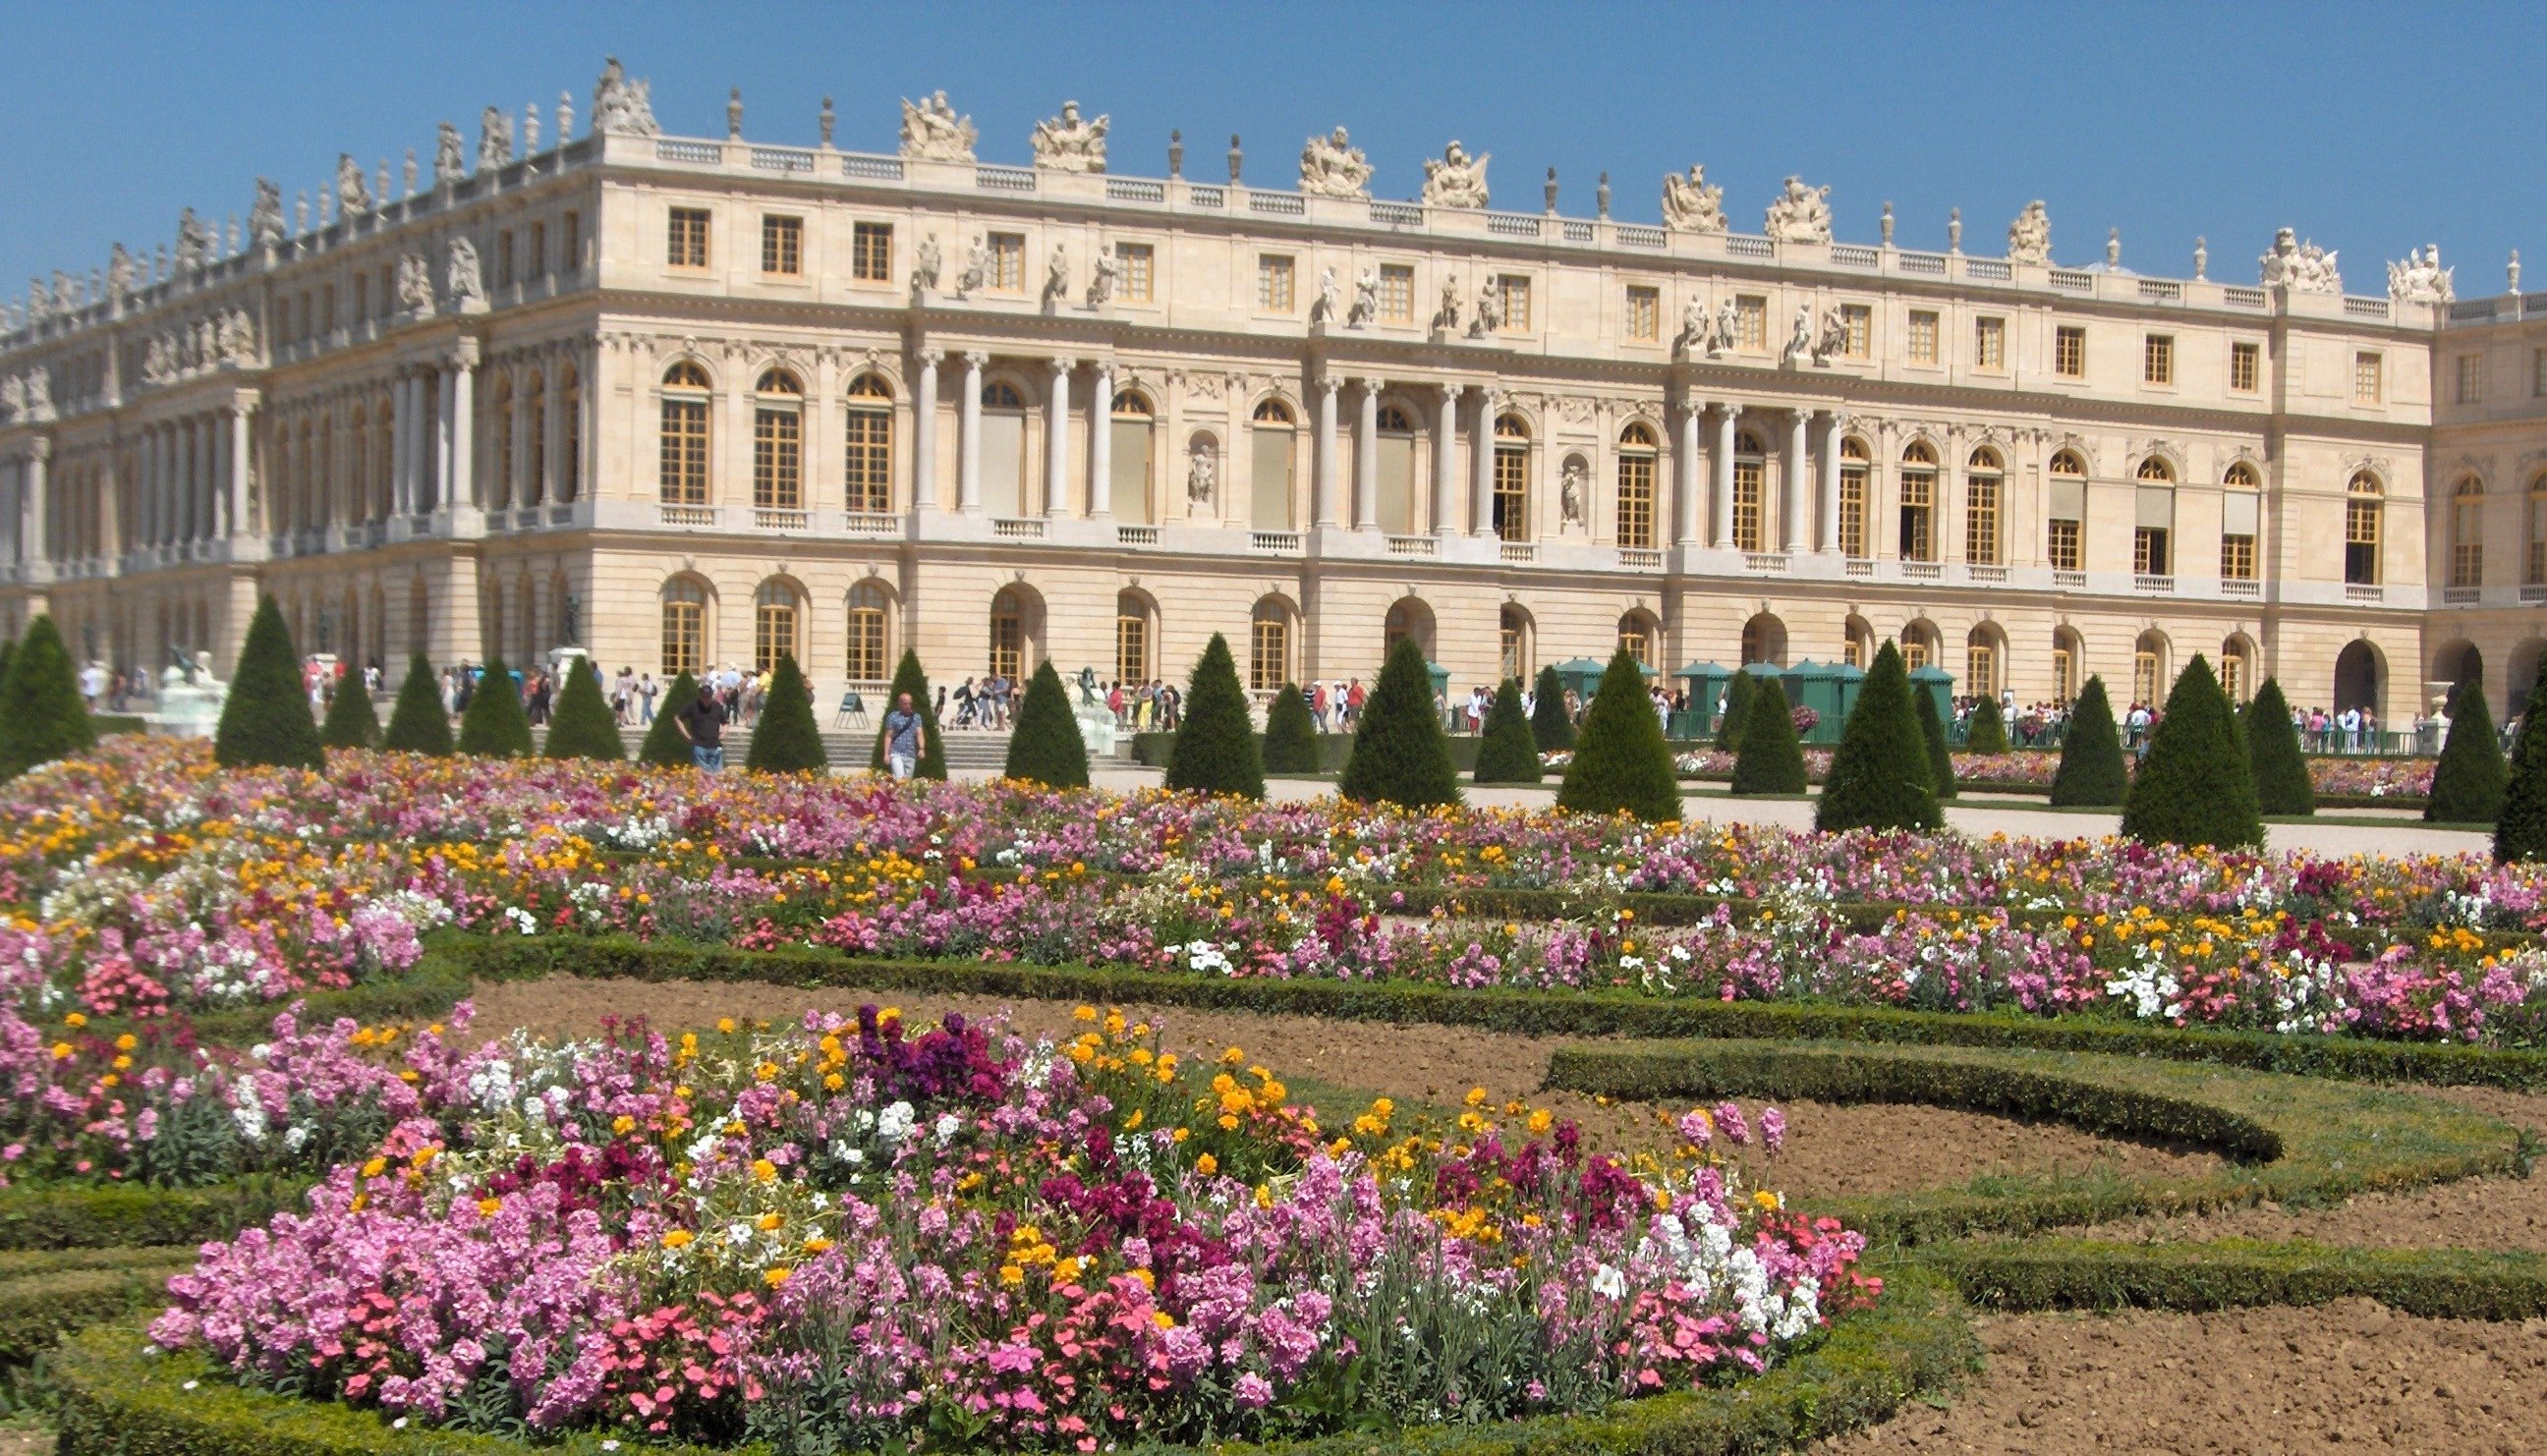 Chateau de versailles. Версальский дворец дворцы Франции. Дворец Версаль версальный парк. Замок Версаль (Chateau de Versailles). Мраморный двор Версальского дворца.